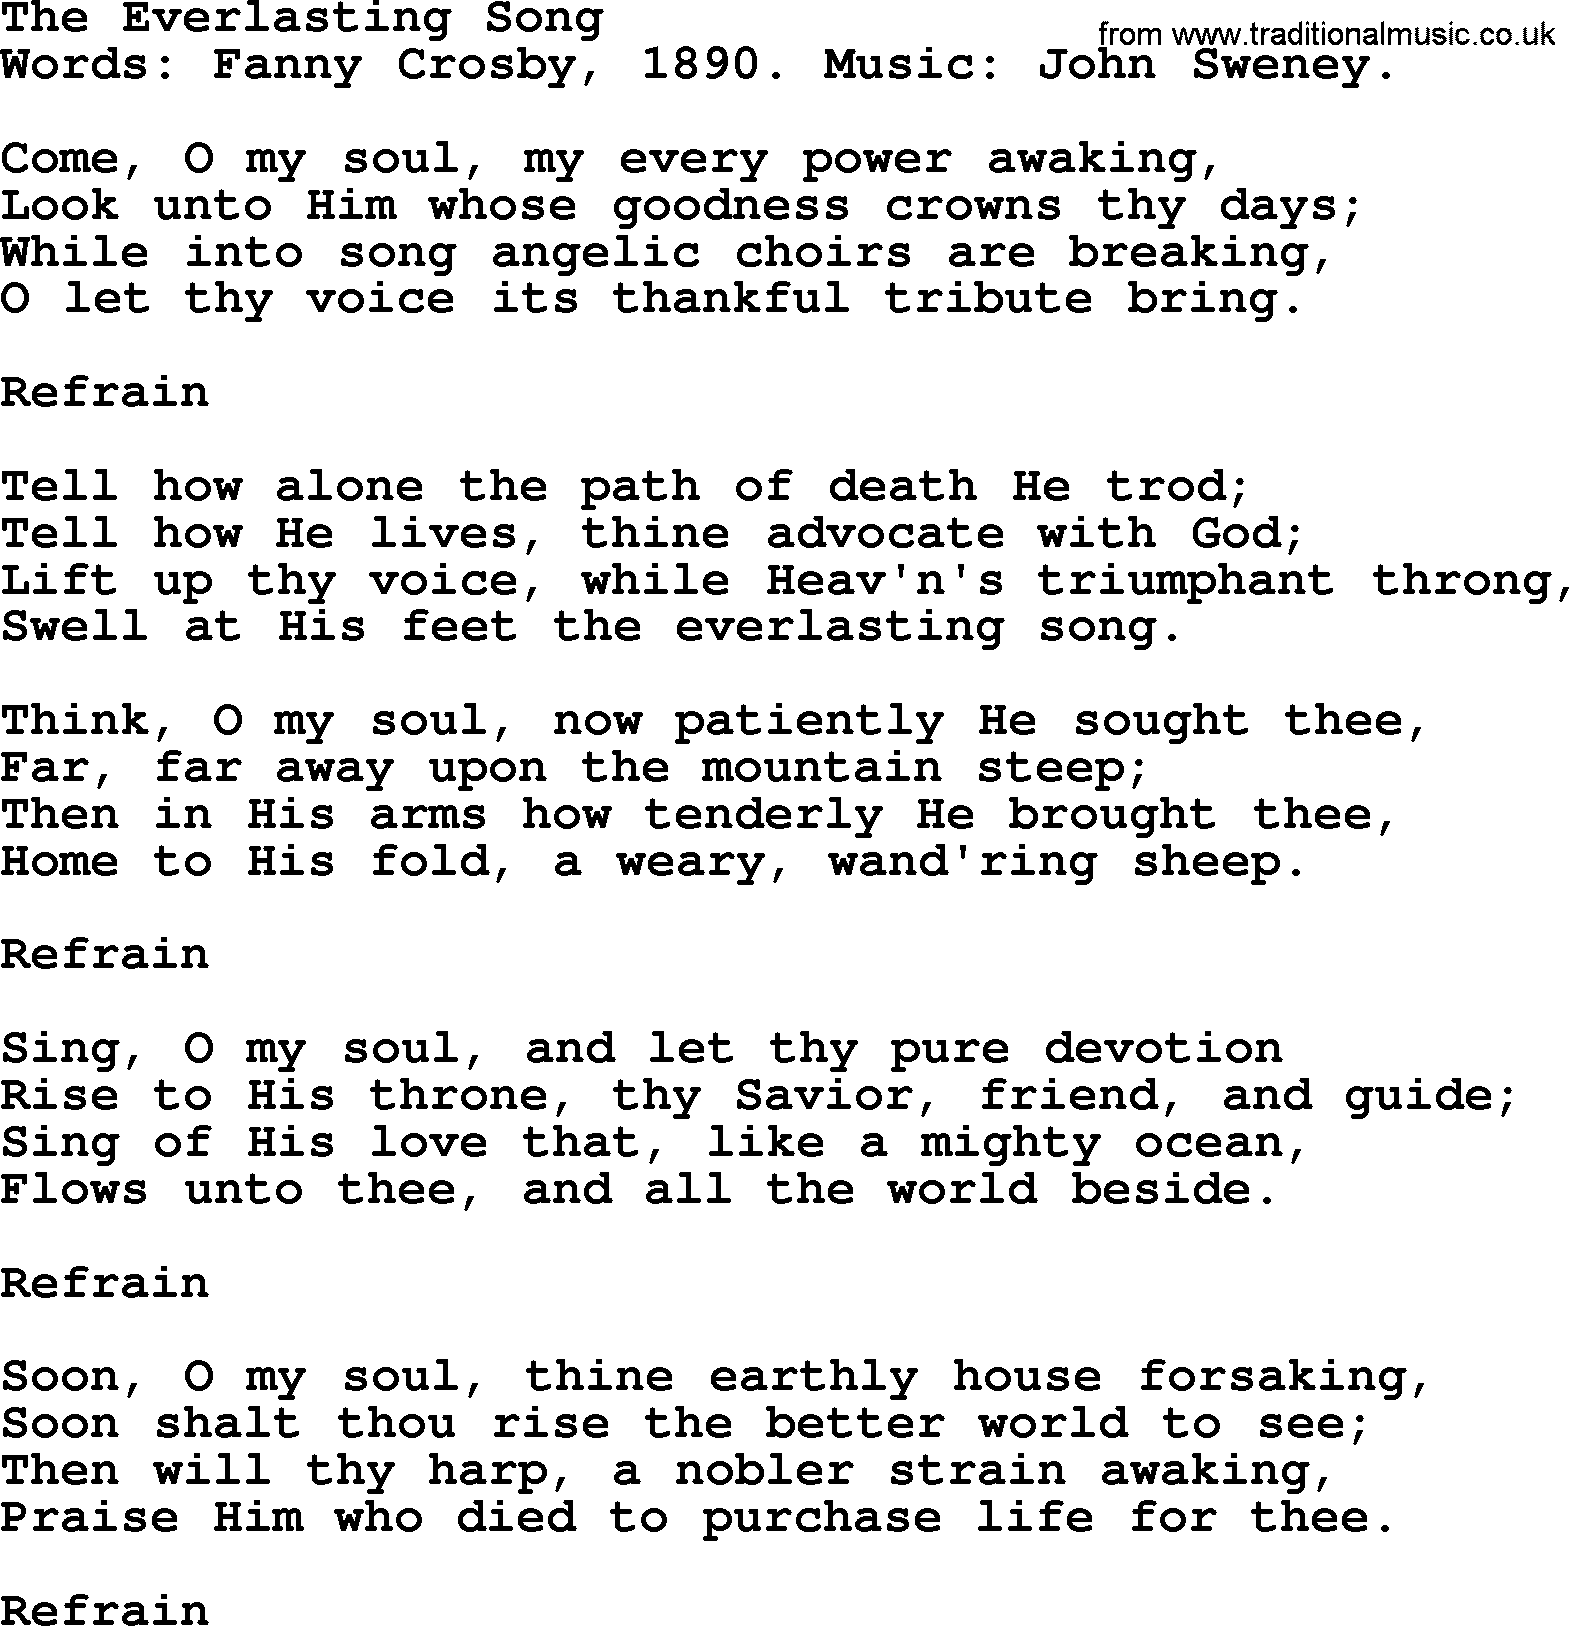 Fanny Crosby song: The Everlasting Song, lyrics